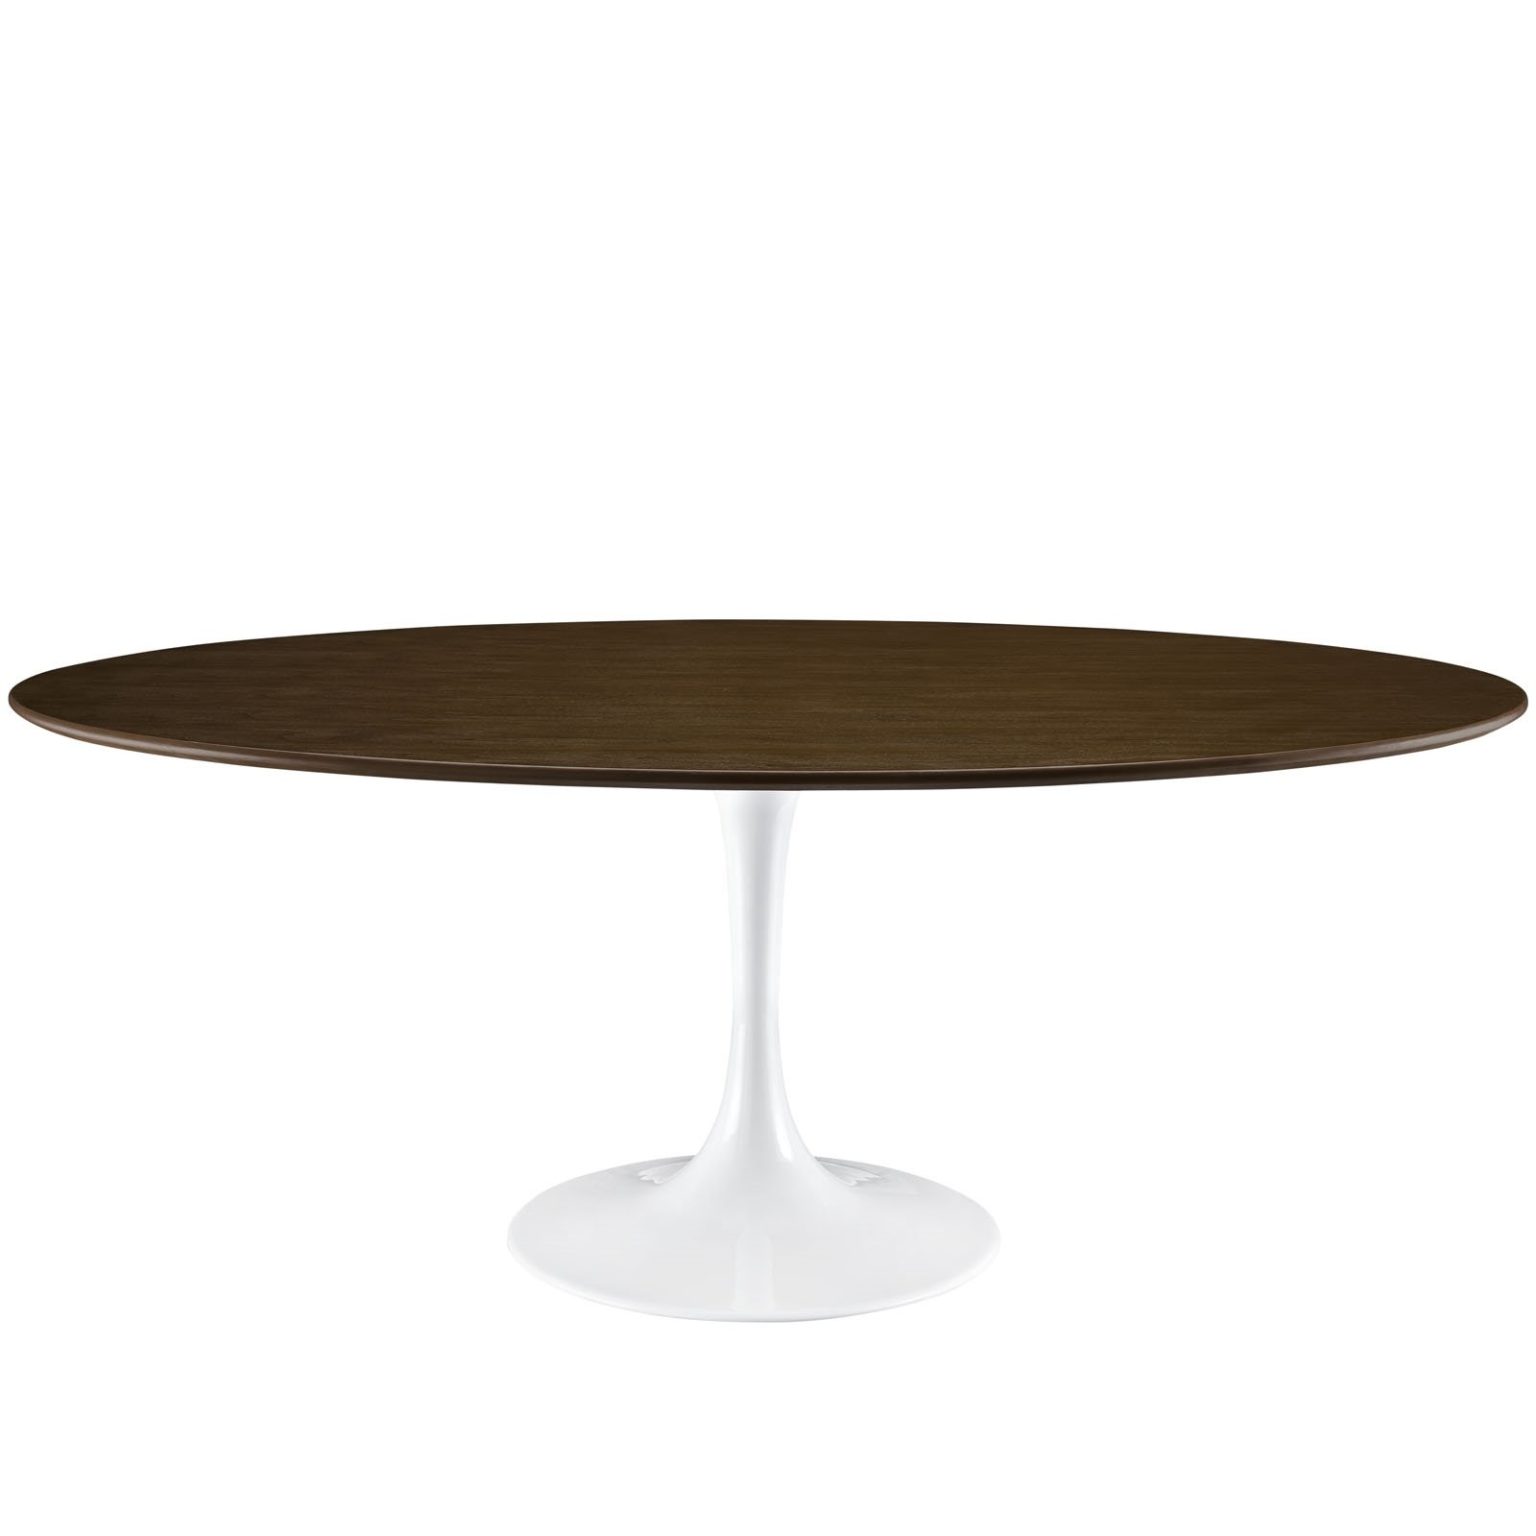 Lippa 78" Oval Wood Dining Table in Walnut - Hyme Furniture